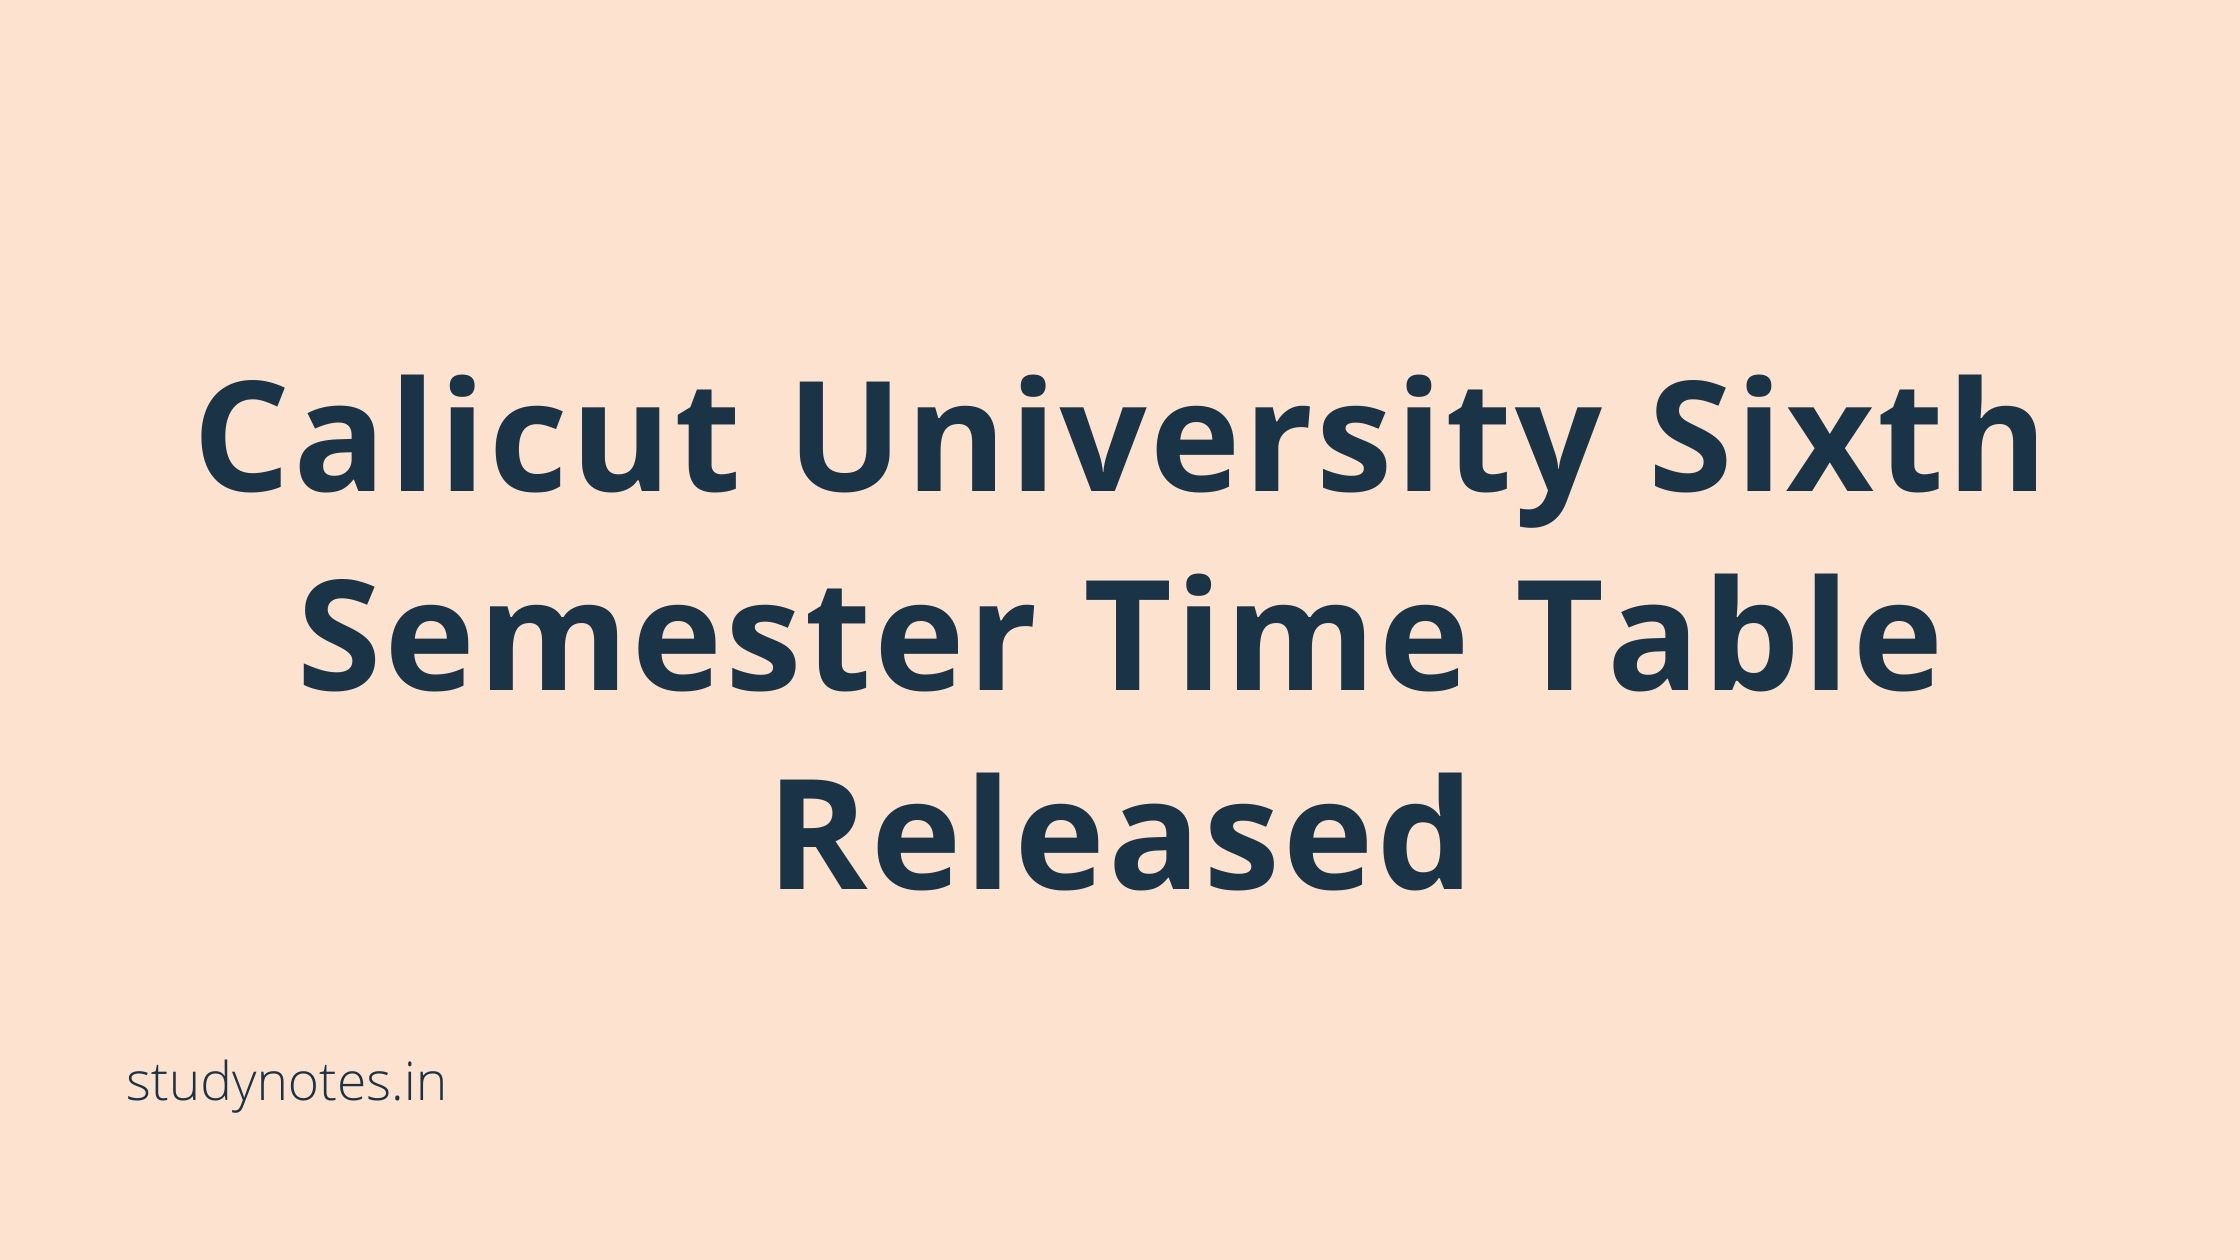 Calicut University Sixth Semester time table